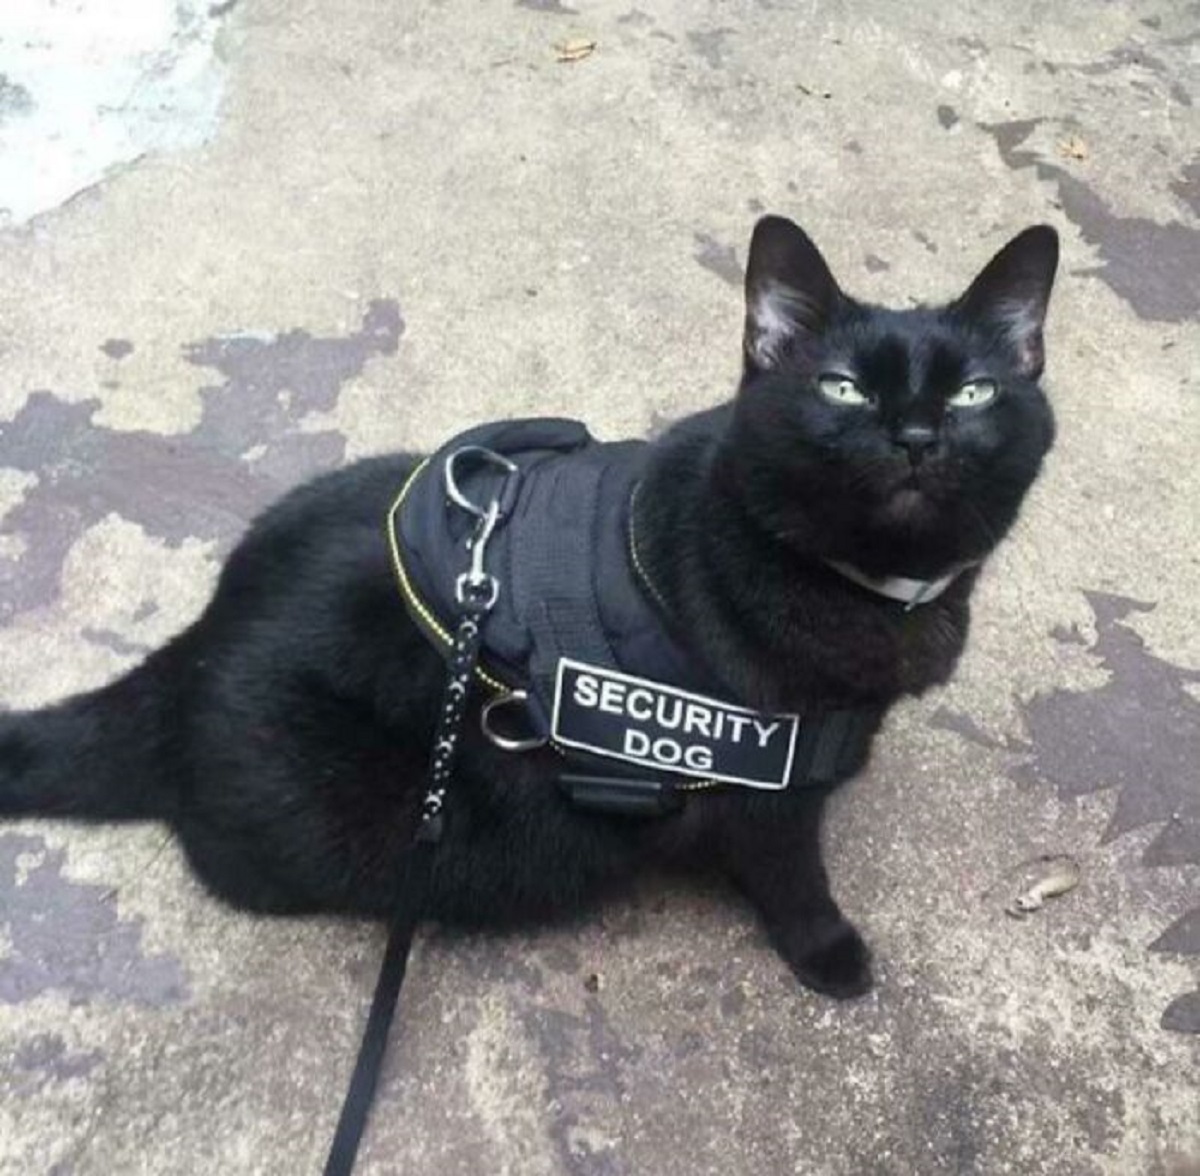 security cat - Security Dog